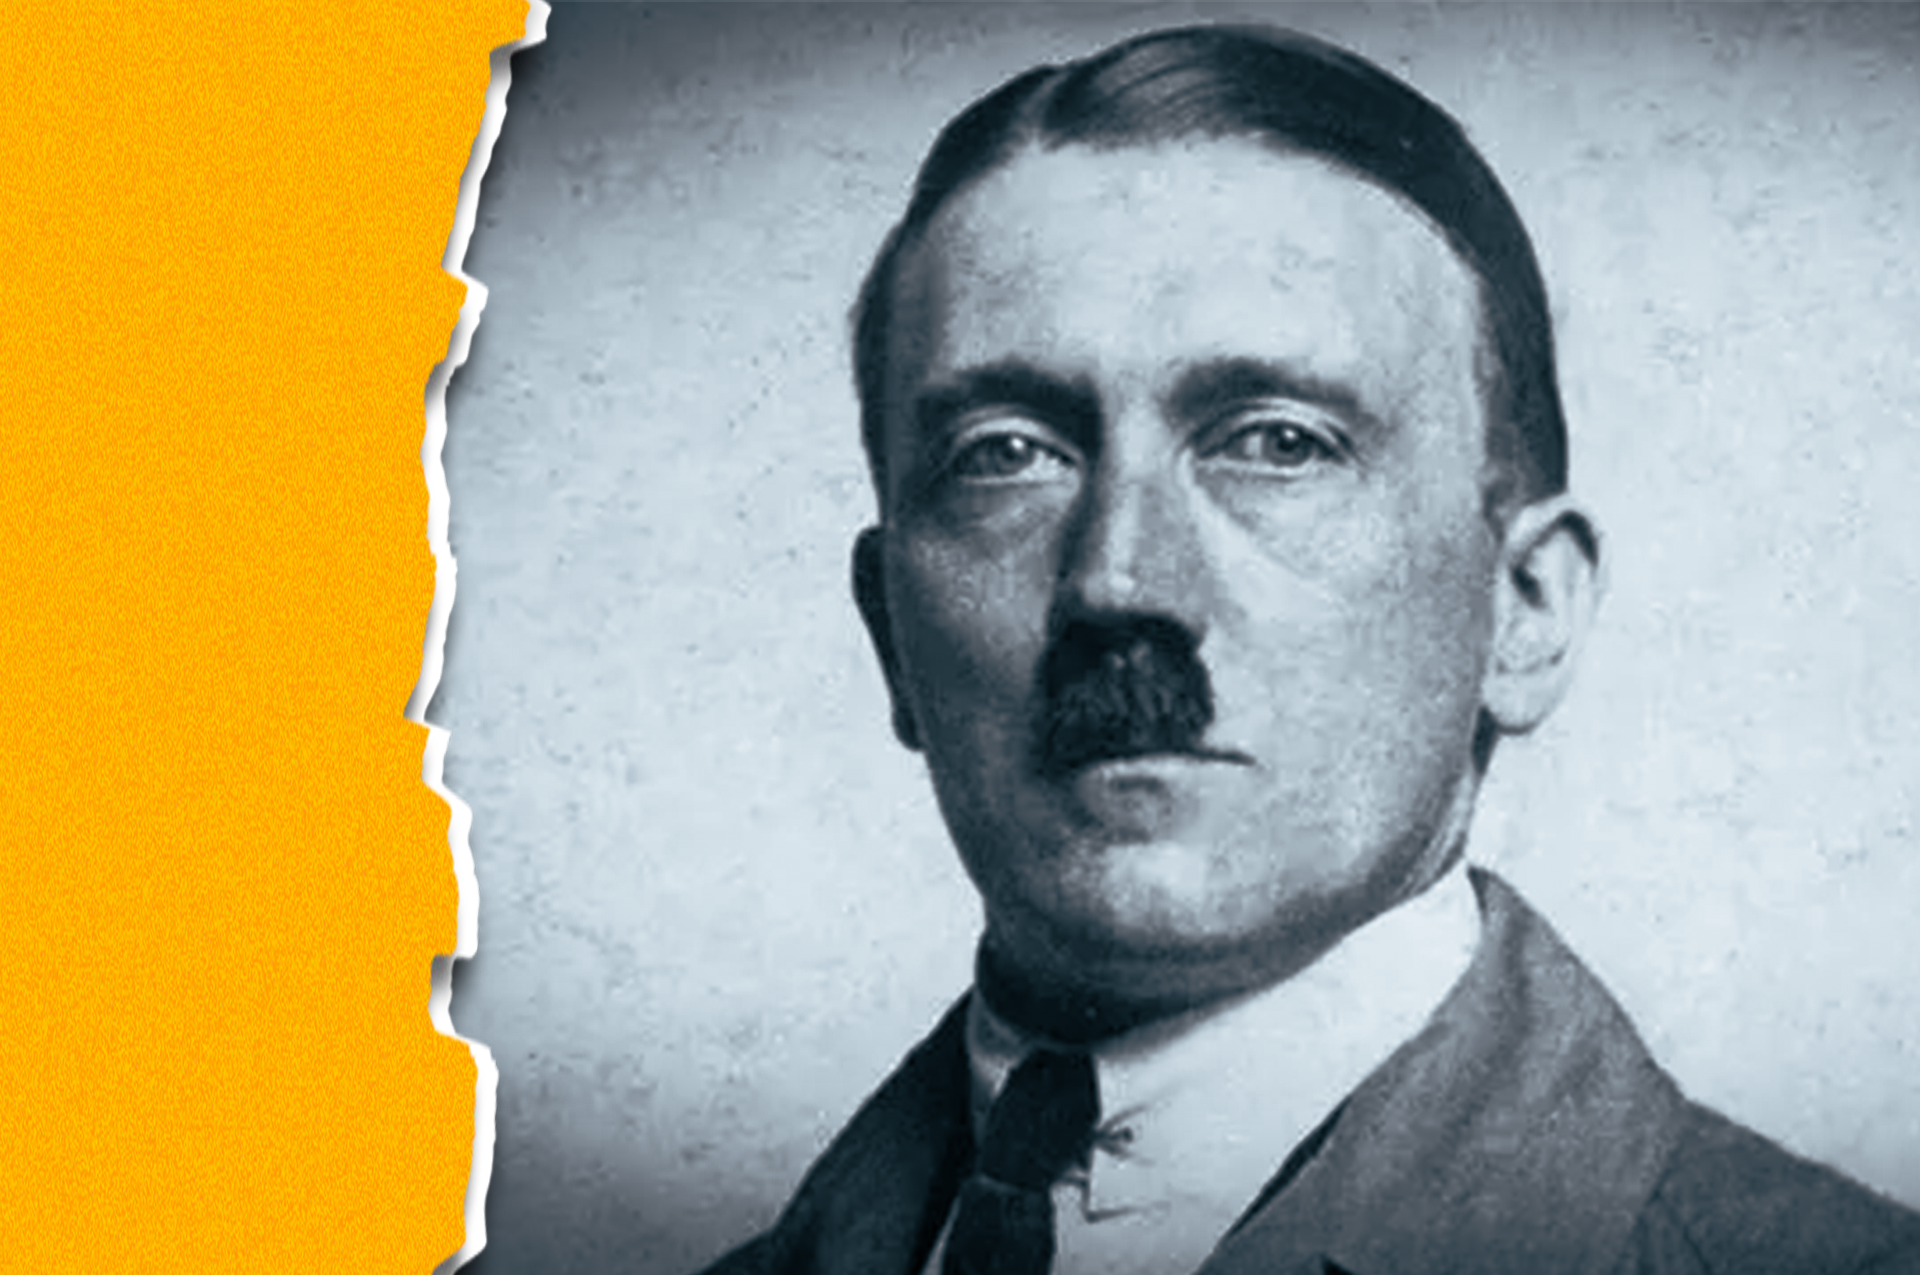 The Dictator Or Ruler - Adolf Hitler